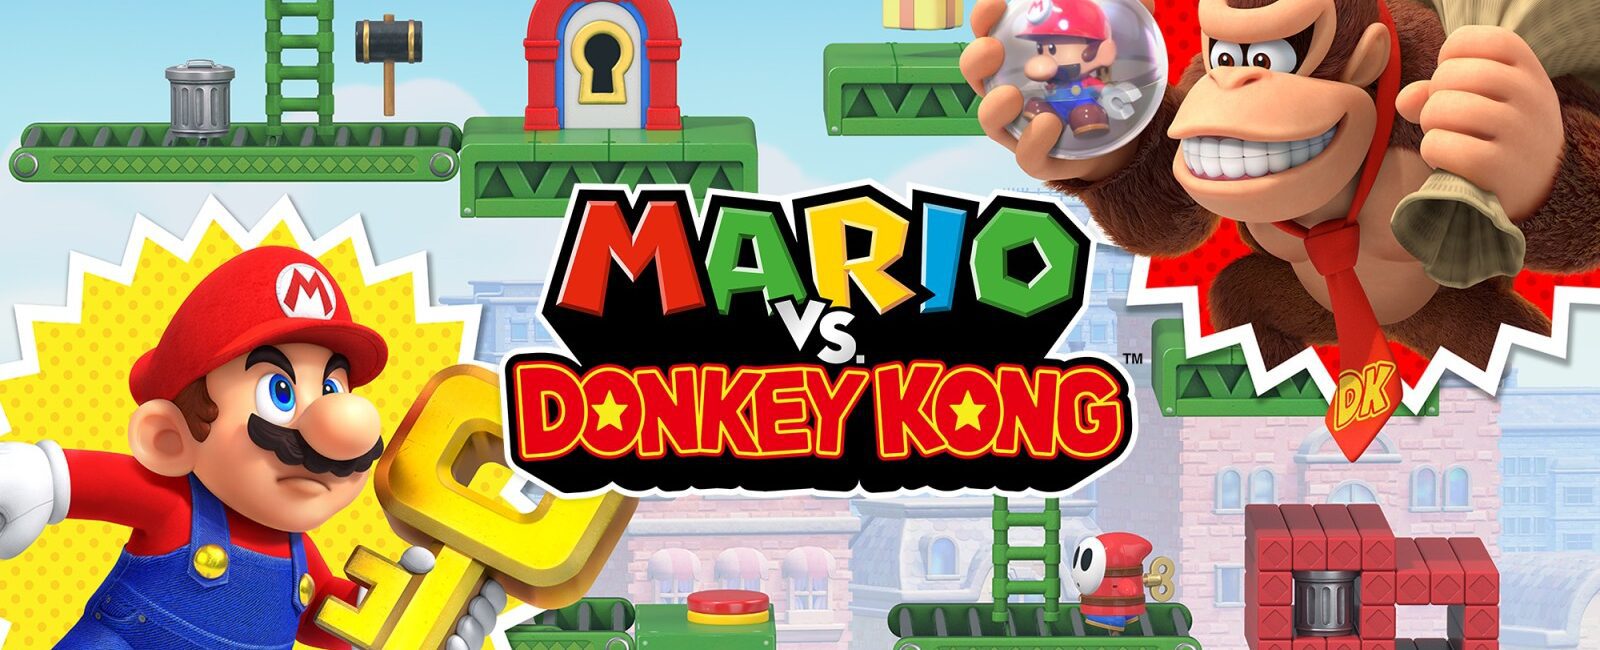 Mario vs. Donkey Kong Nintendo Switch game header